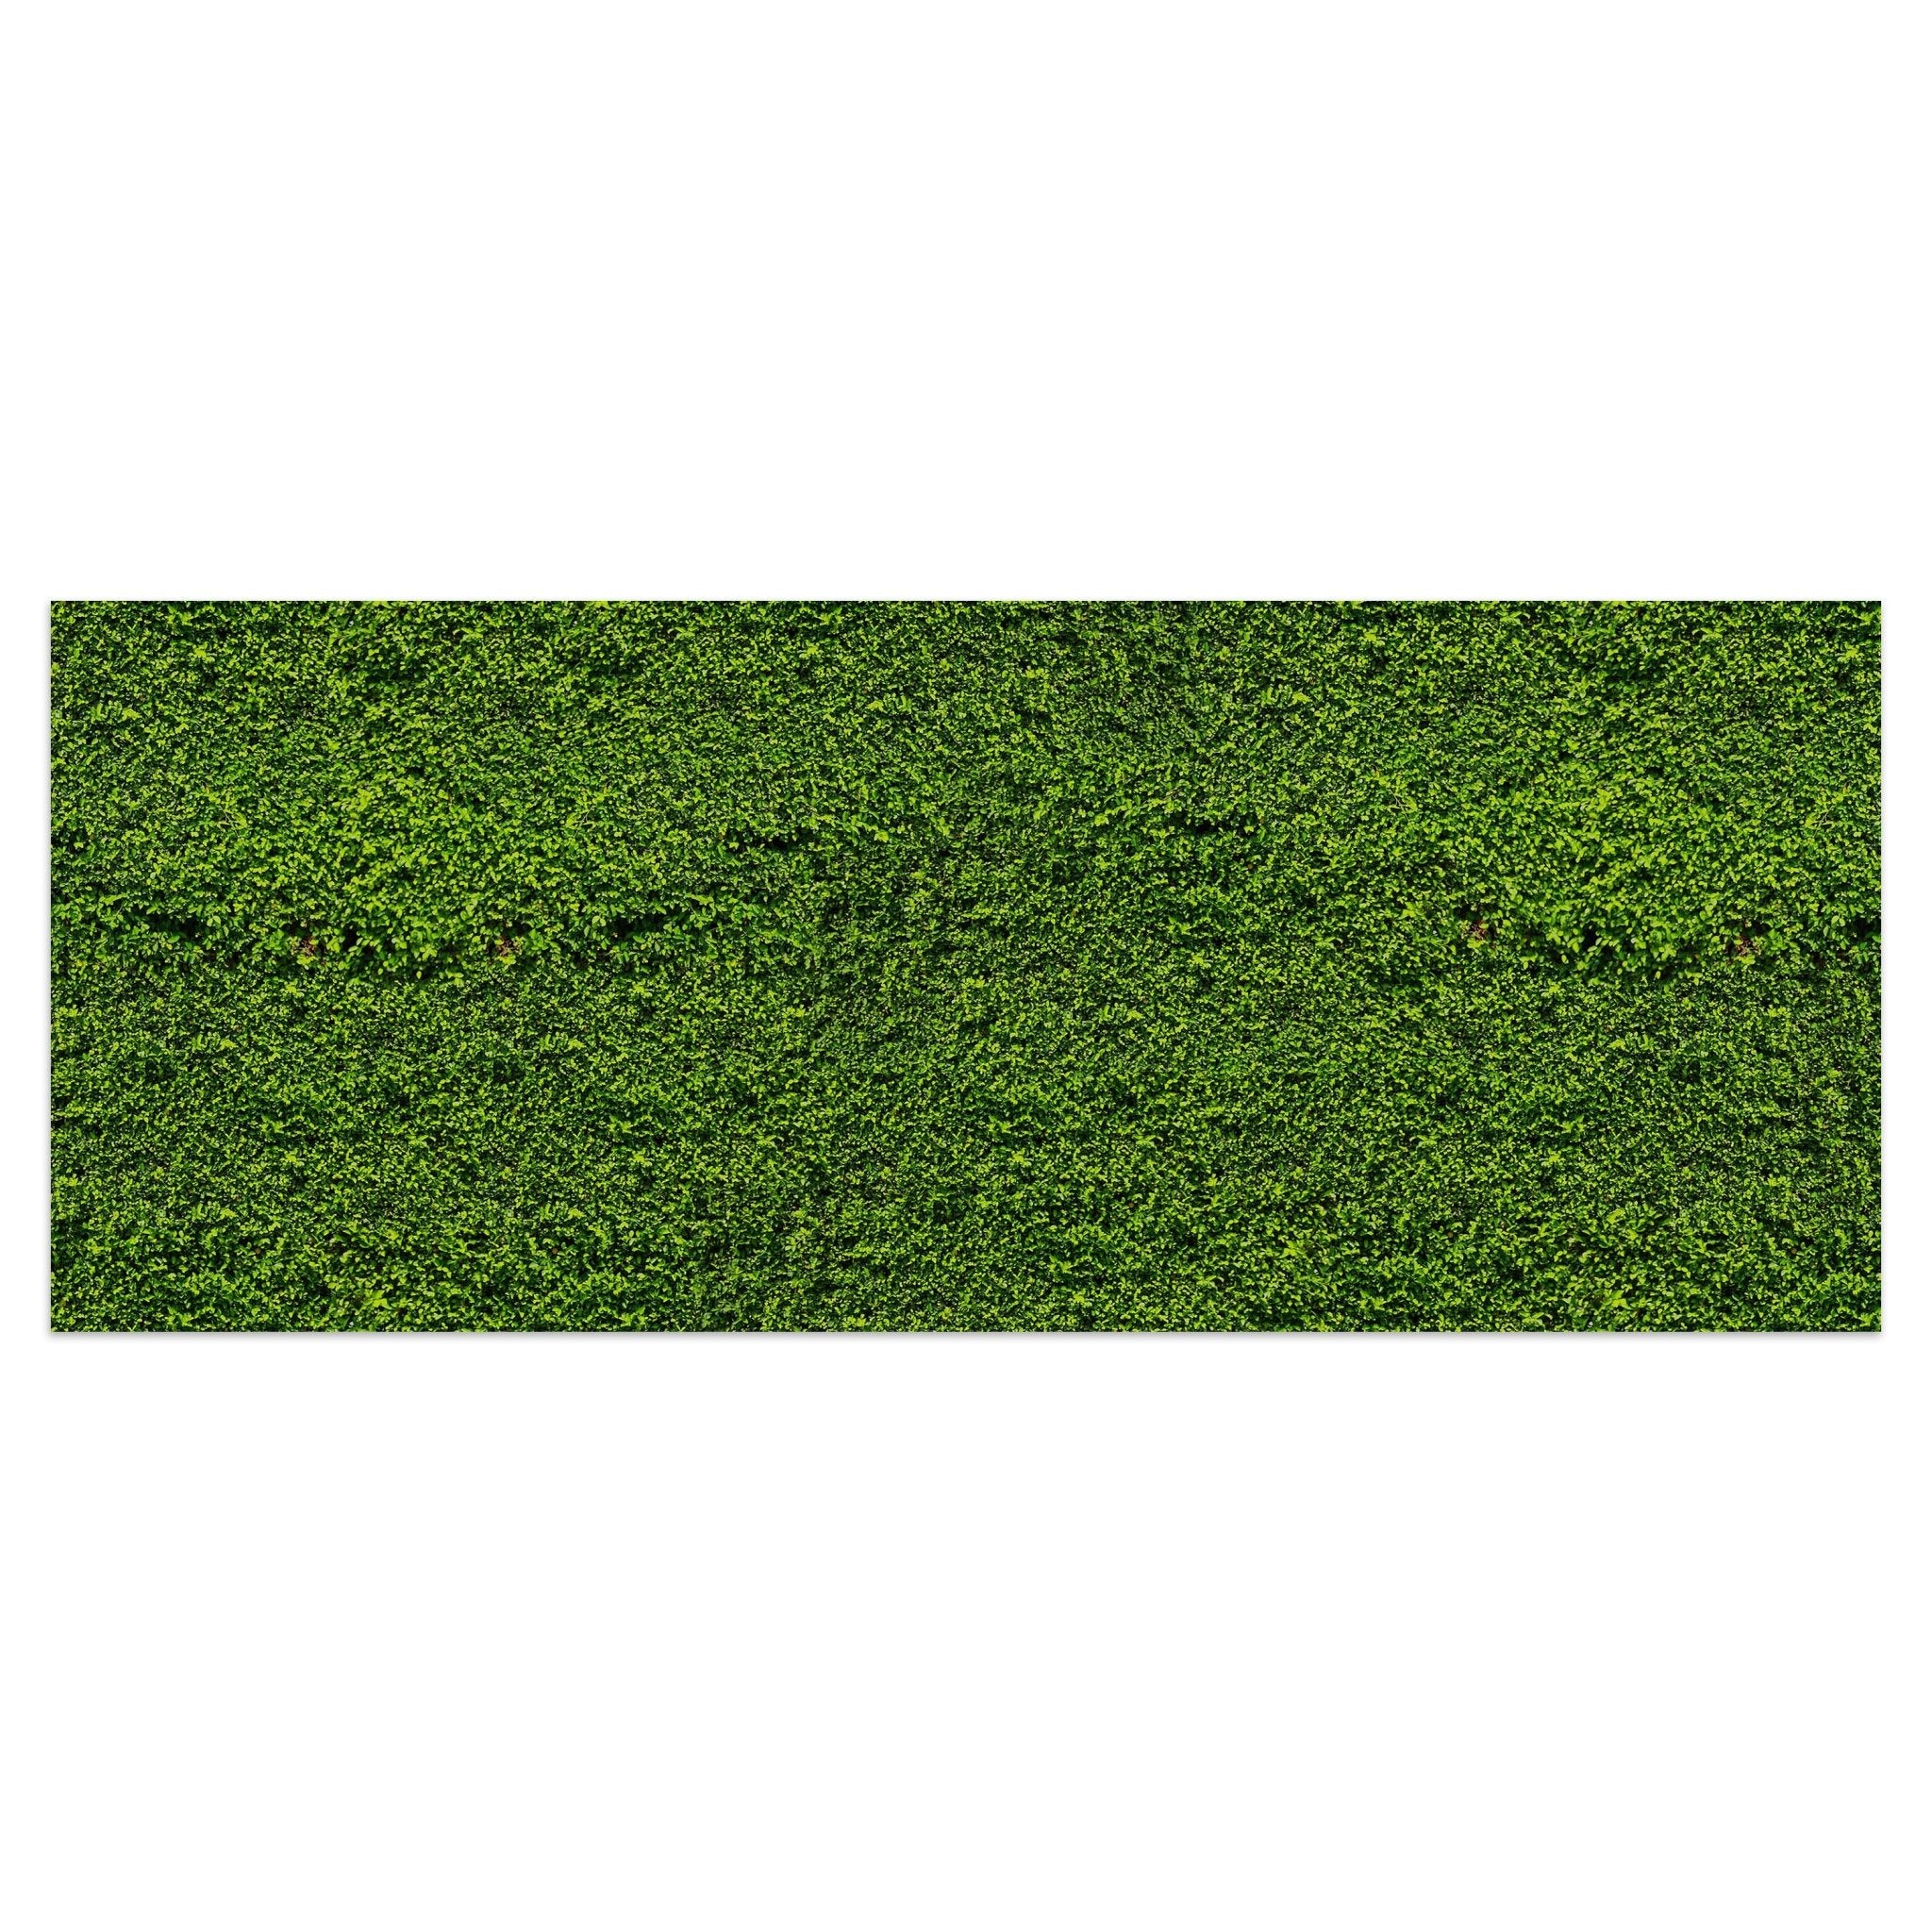 Leinwandbild Grüne Mauer M0572 kaufen - Bild 1